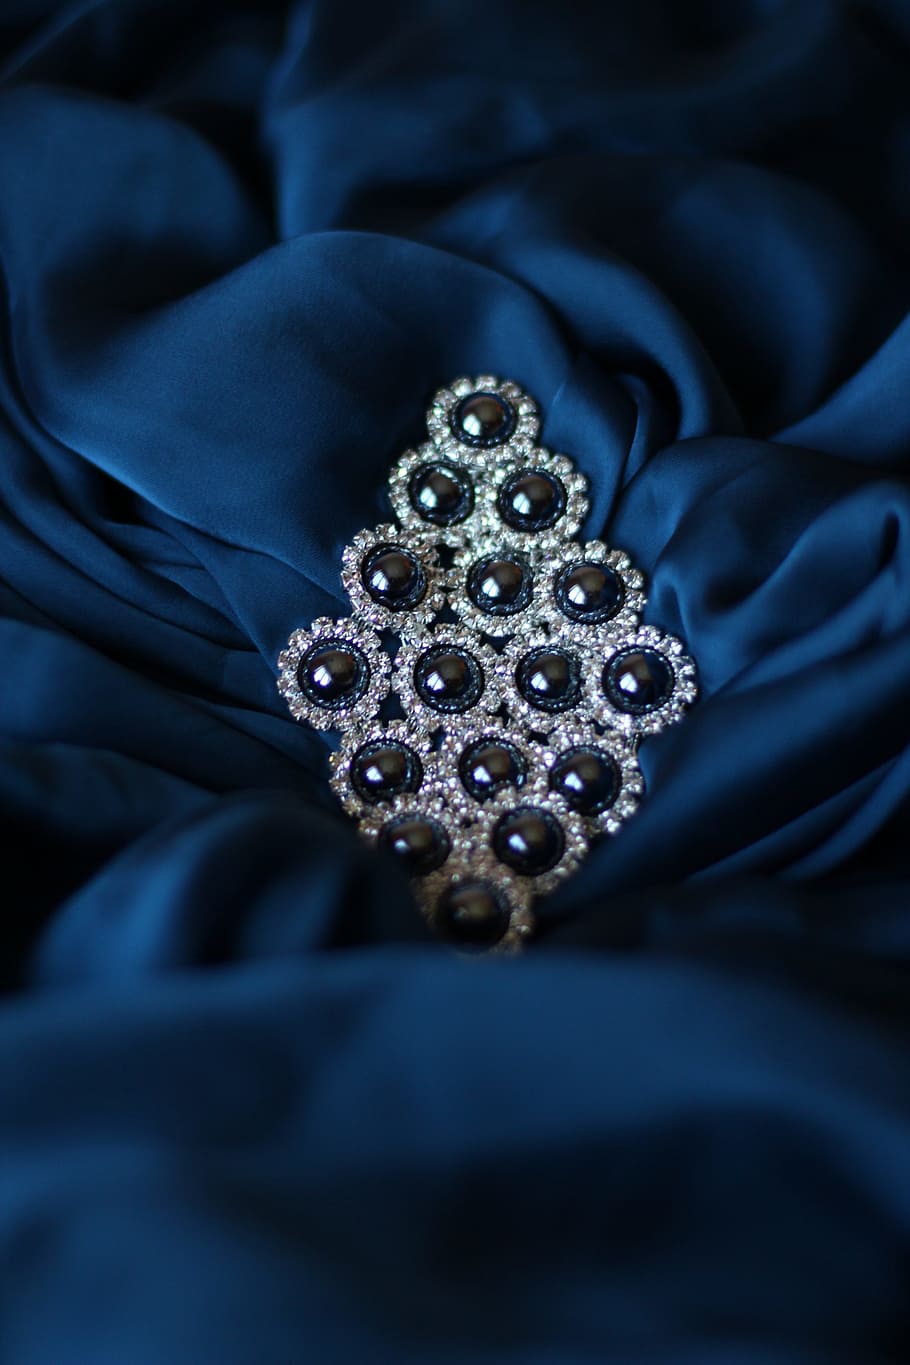 Ornament, Silk, blue, diamond - gemstone, luxury, jewelry, wealth, precious gem, gemstone, close-up